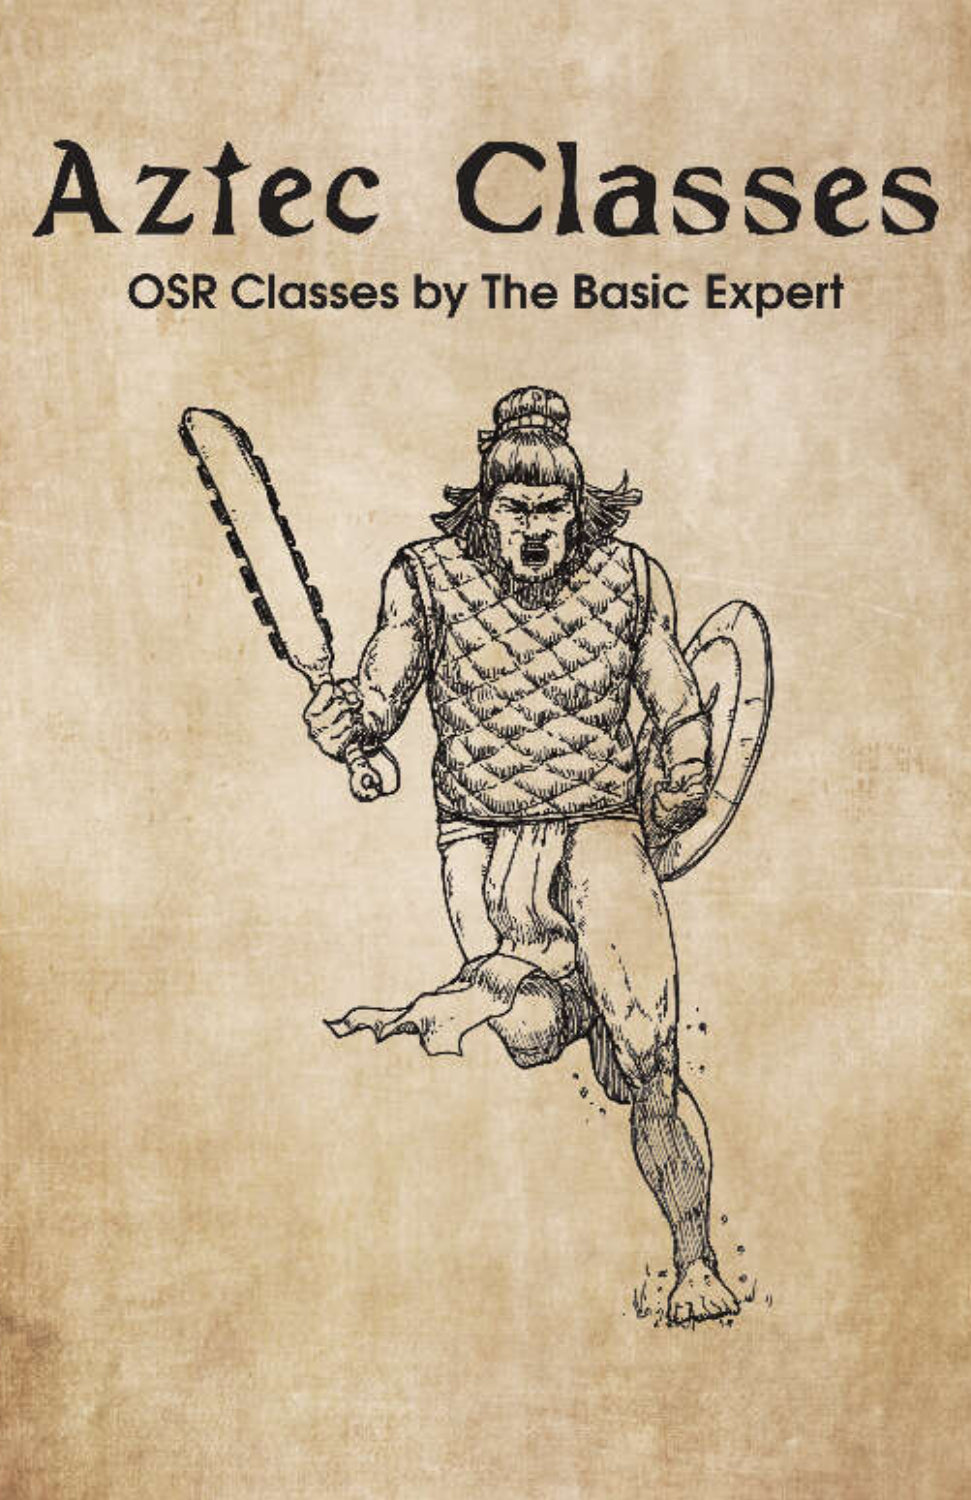 Aztec OSR Classes